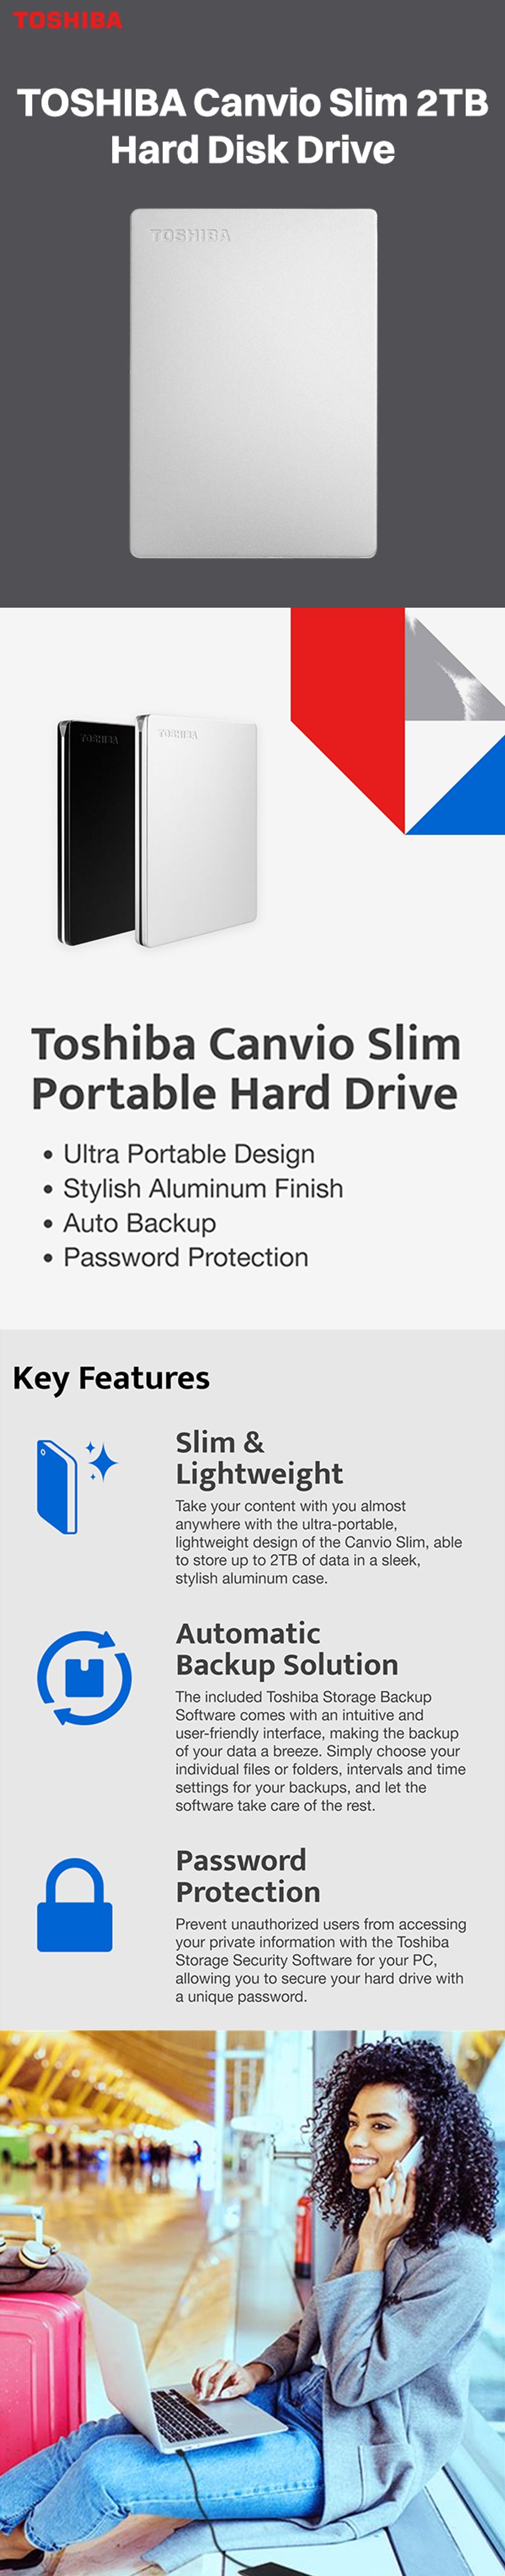 Toshiba Canvio Slim II (1TB) Review